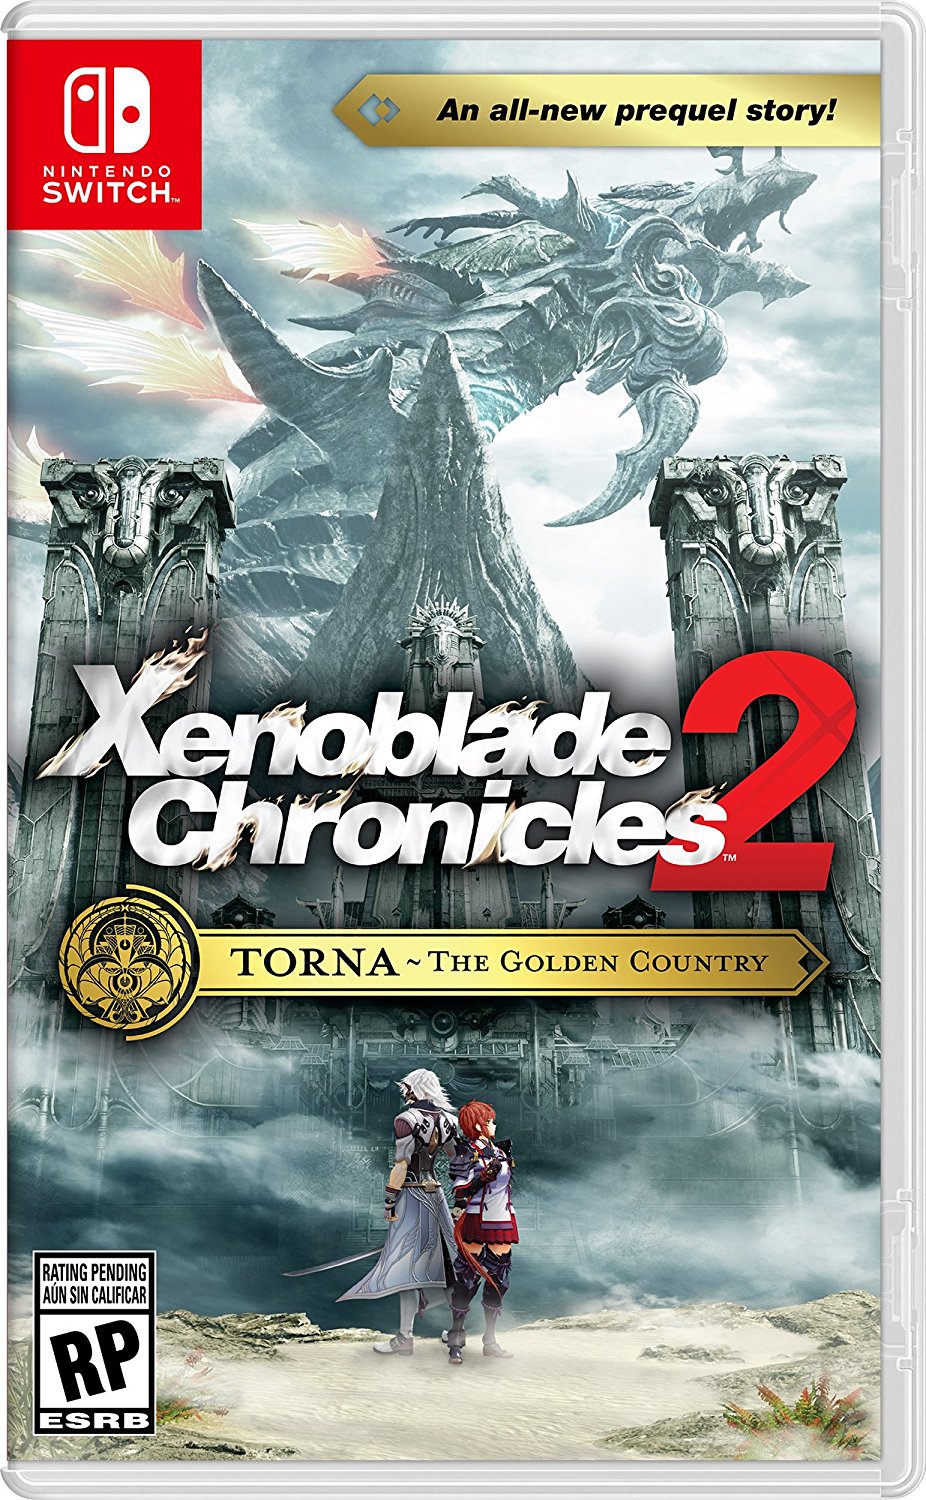 Xenoblade Chronicles 2 Torna  Golden Country boxart, preorders open